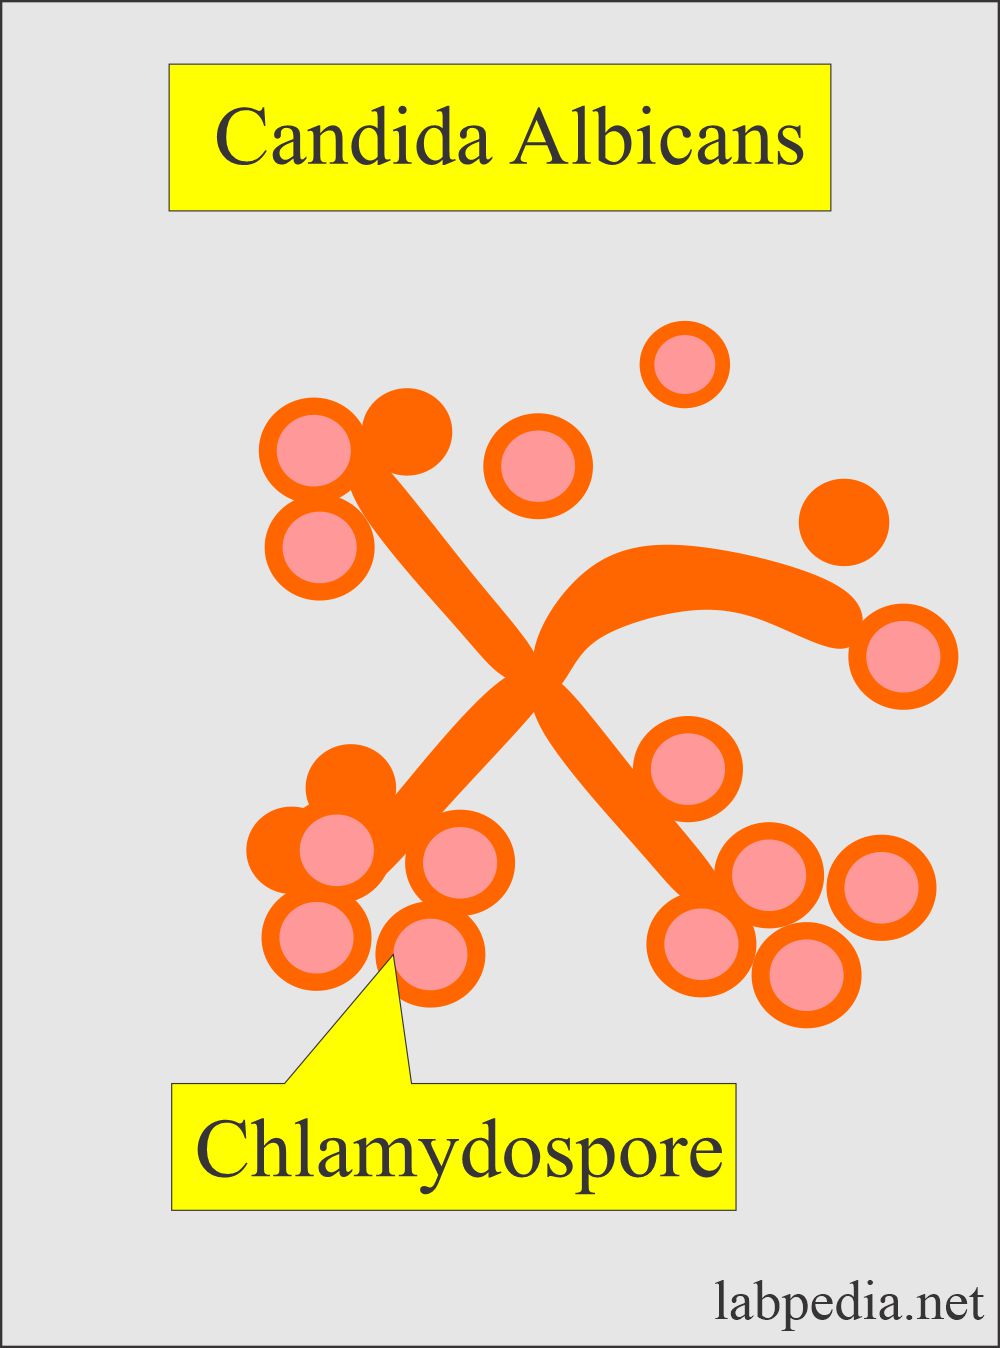 candida albicans showing chlamydospore